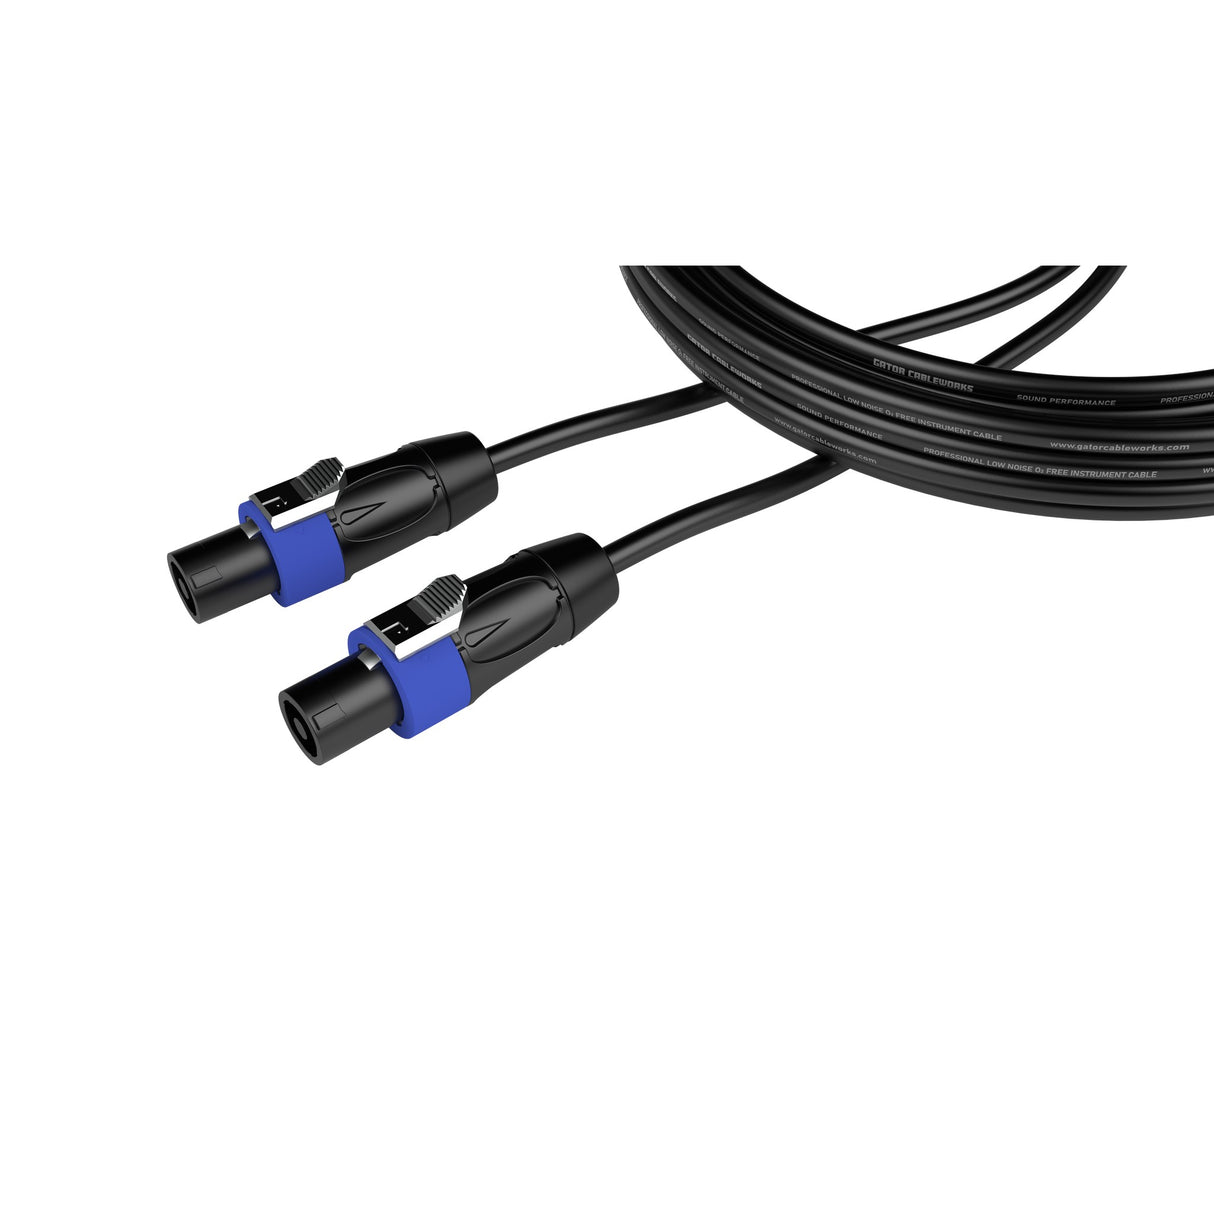 Gator CBW-HDLSPKR2TWLK-CBLE-6 Headliner Series Twist Lock Connector to Twist Lock Connector Speaker Cable, 6-Foot